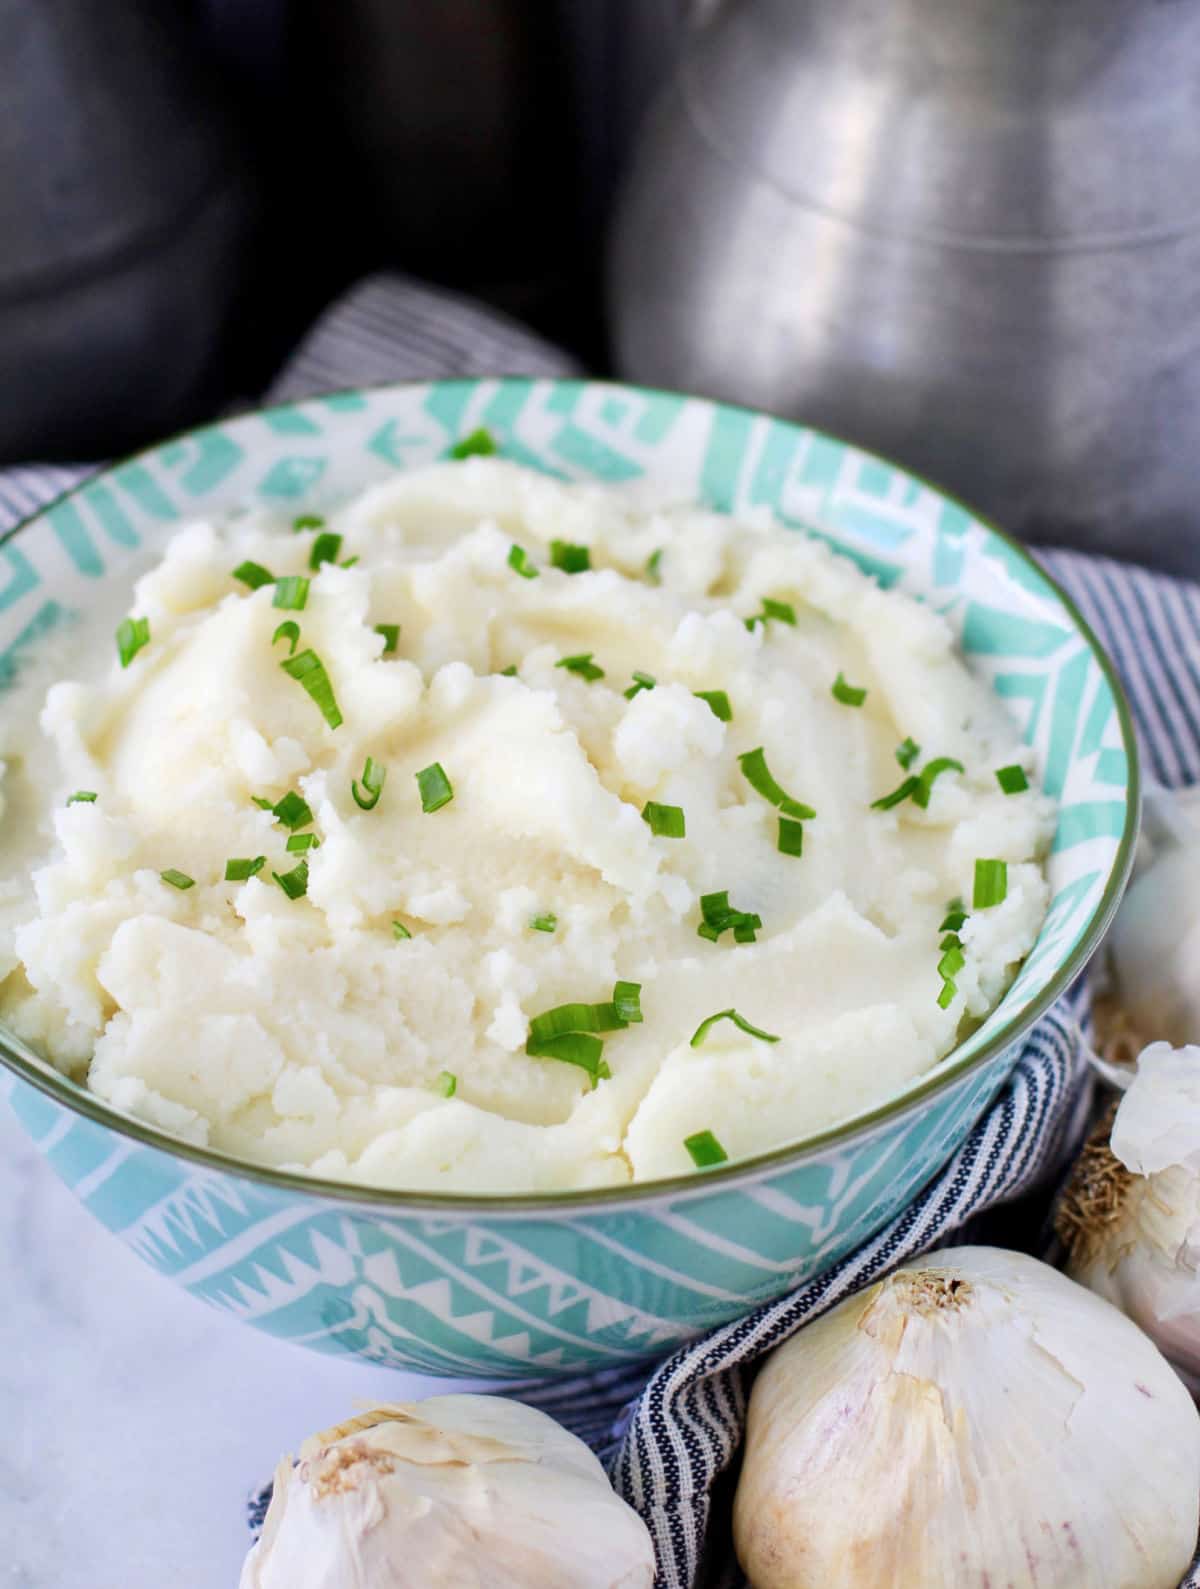 Creamy Garlic Mashed Potatoes with garlic heads next to the bowl.